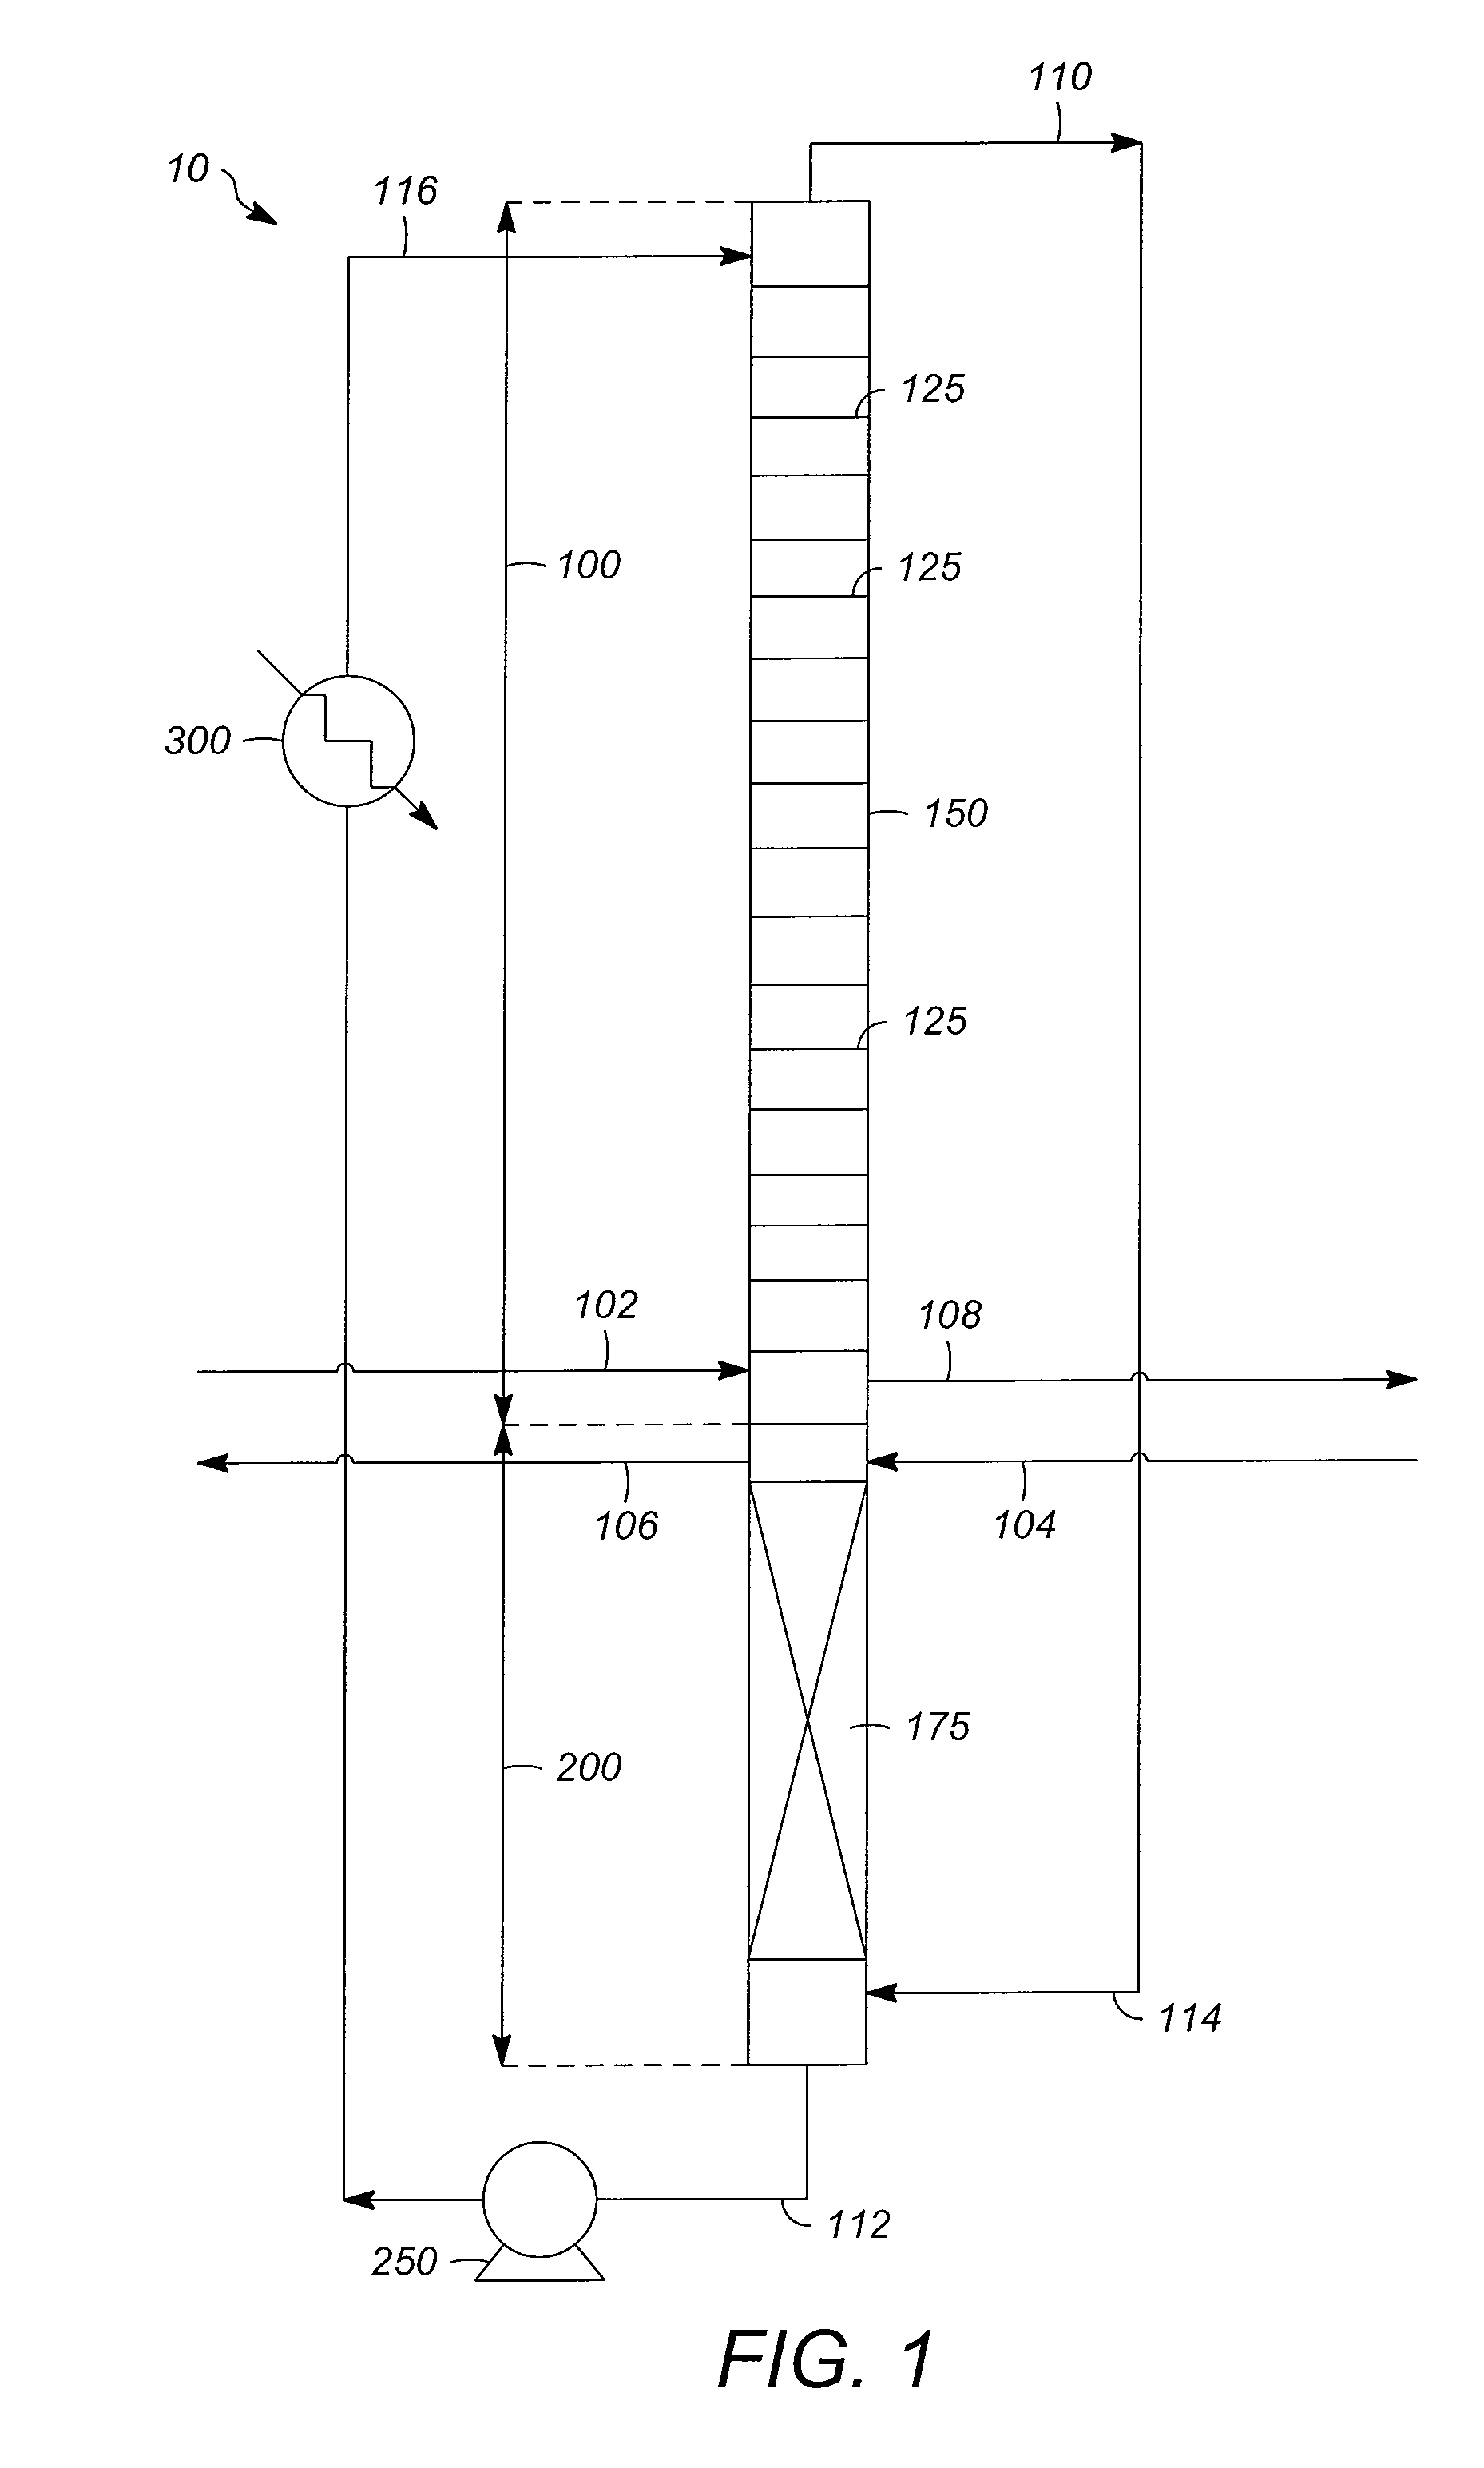 Configuration of contacting zones in vapor liquid contacting apparatuses